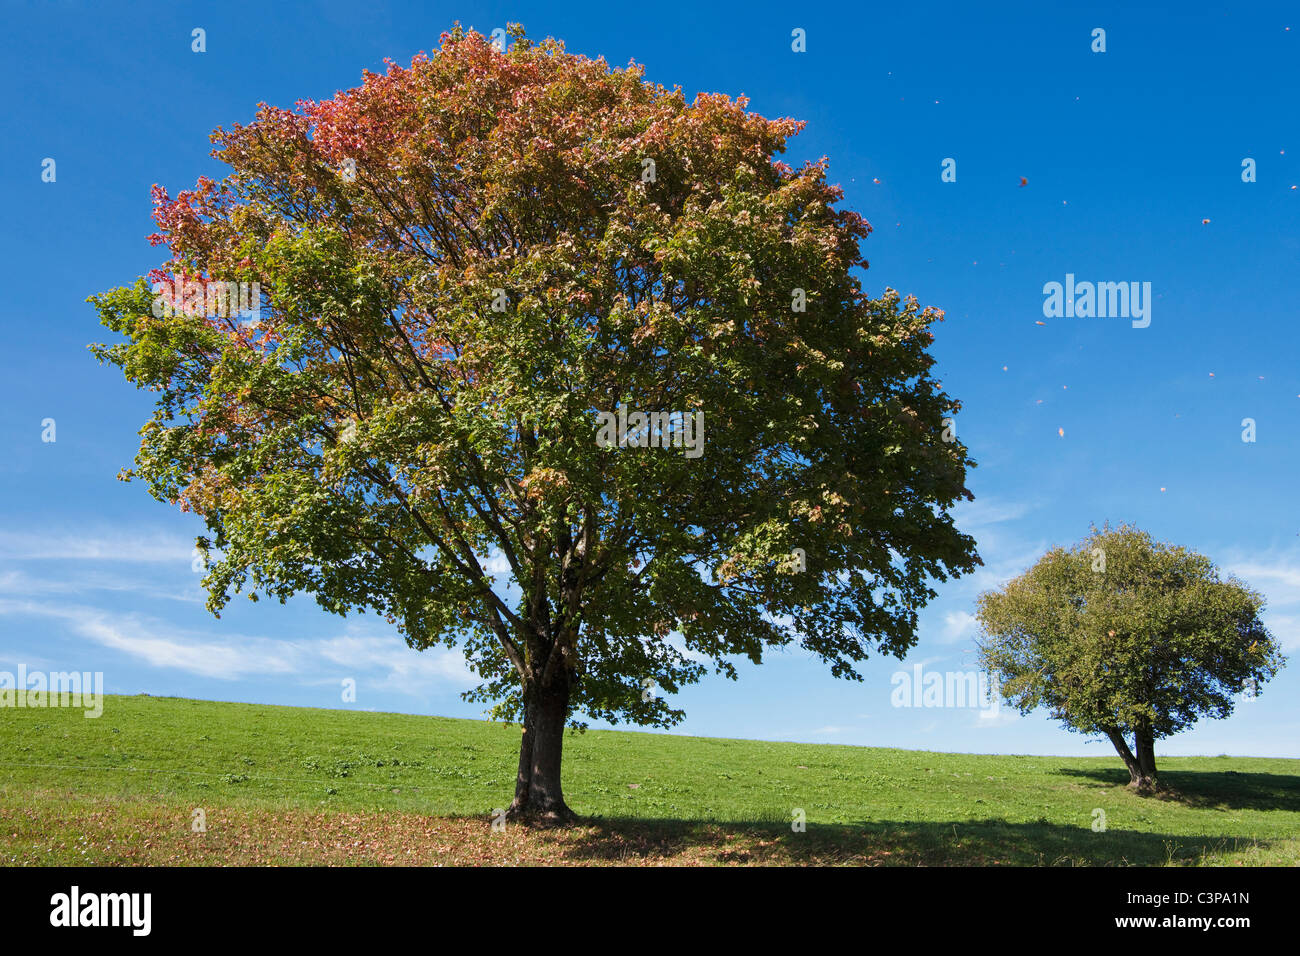 Germany, Bavaria, Maple trees in field Stock Photo